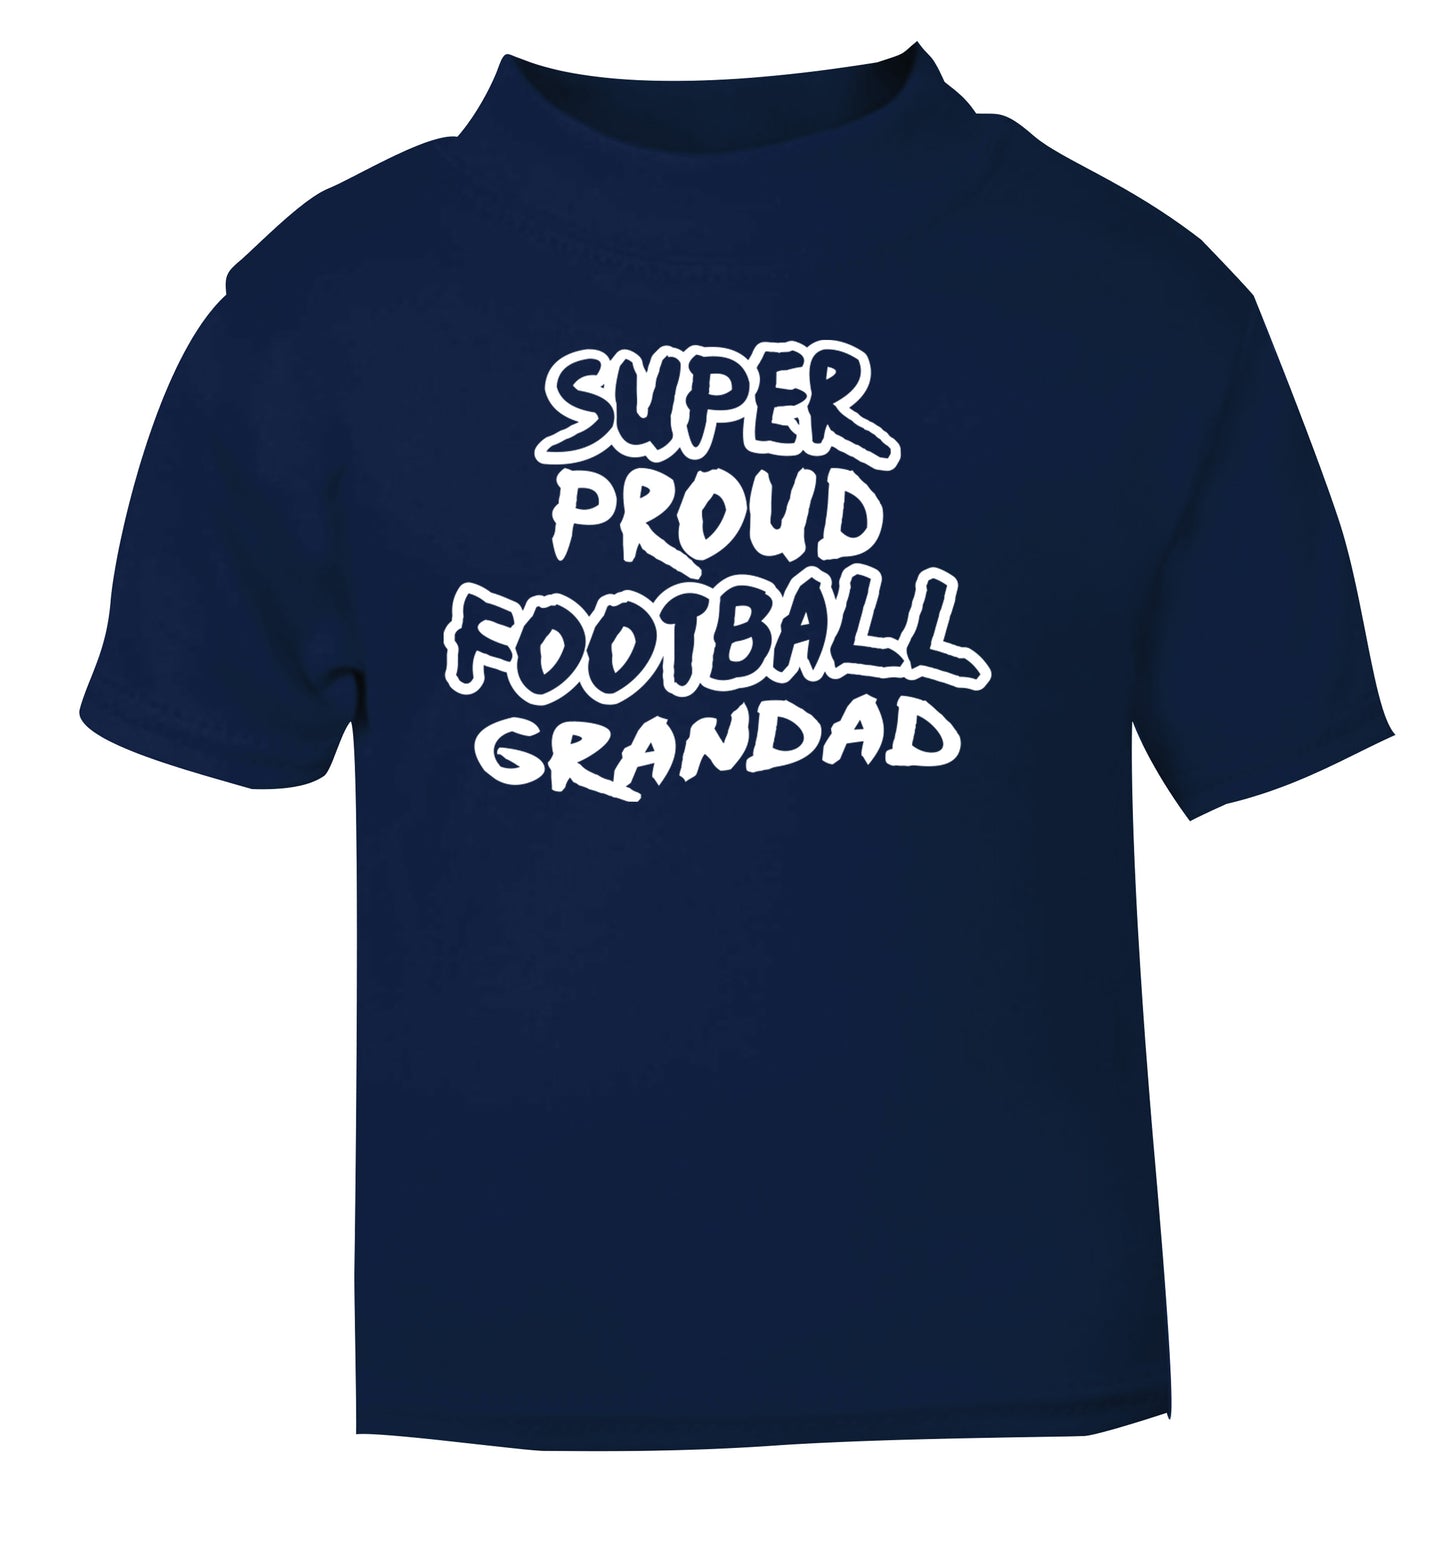 Super proud football grandad navy Baby Toddler Tshirt 2 Years